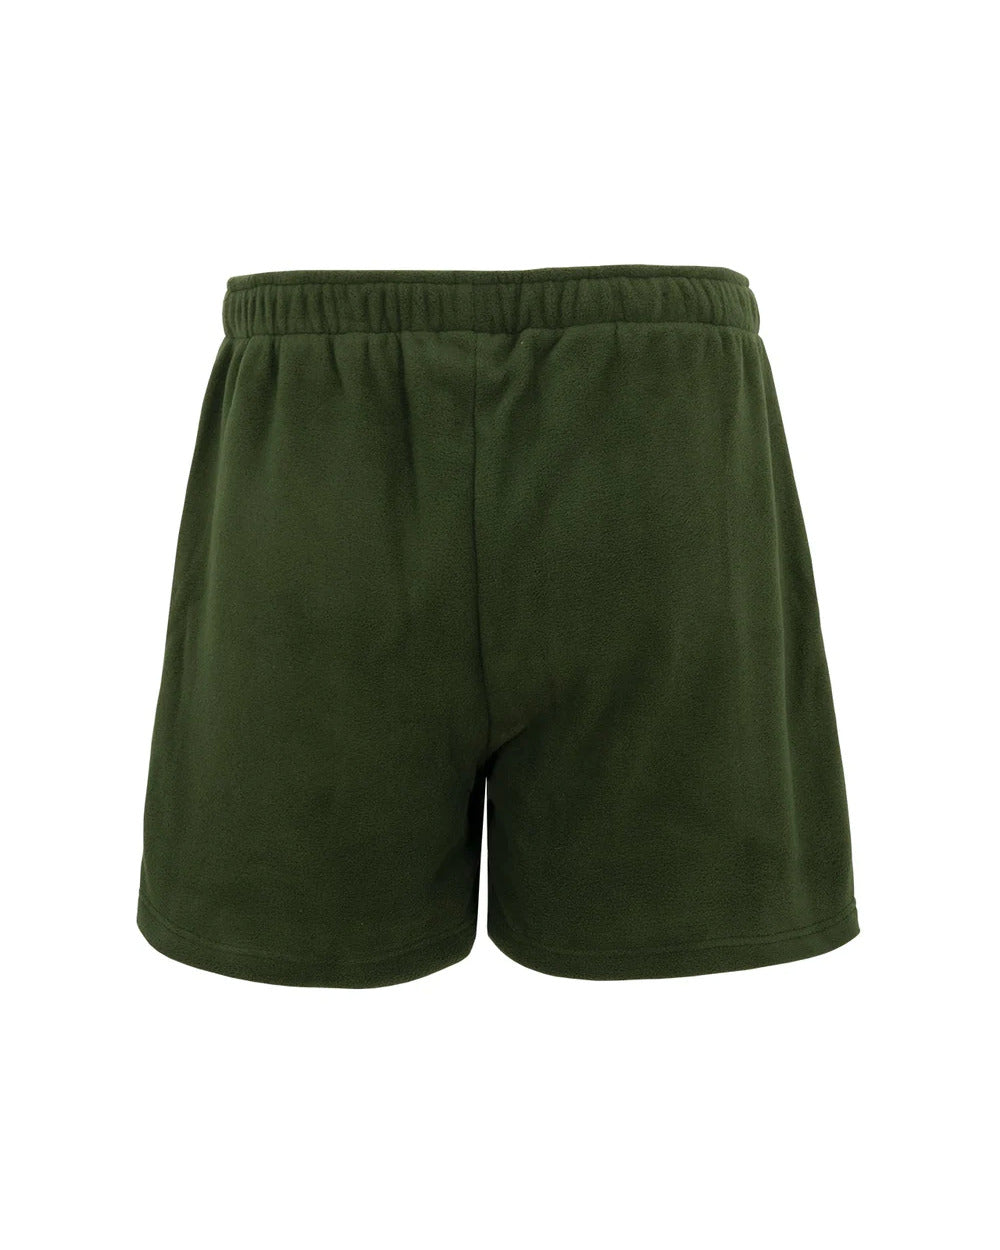 Olive Coloured Swazi Micro Dribacks Shorts On A White Background 